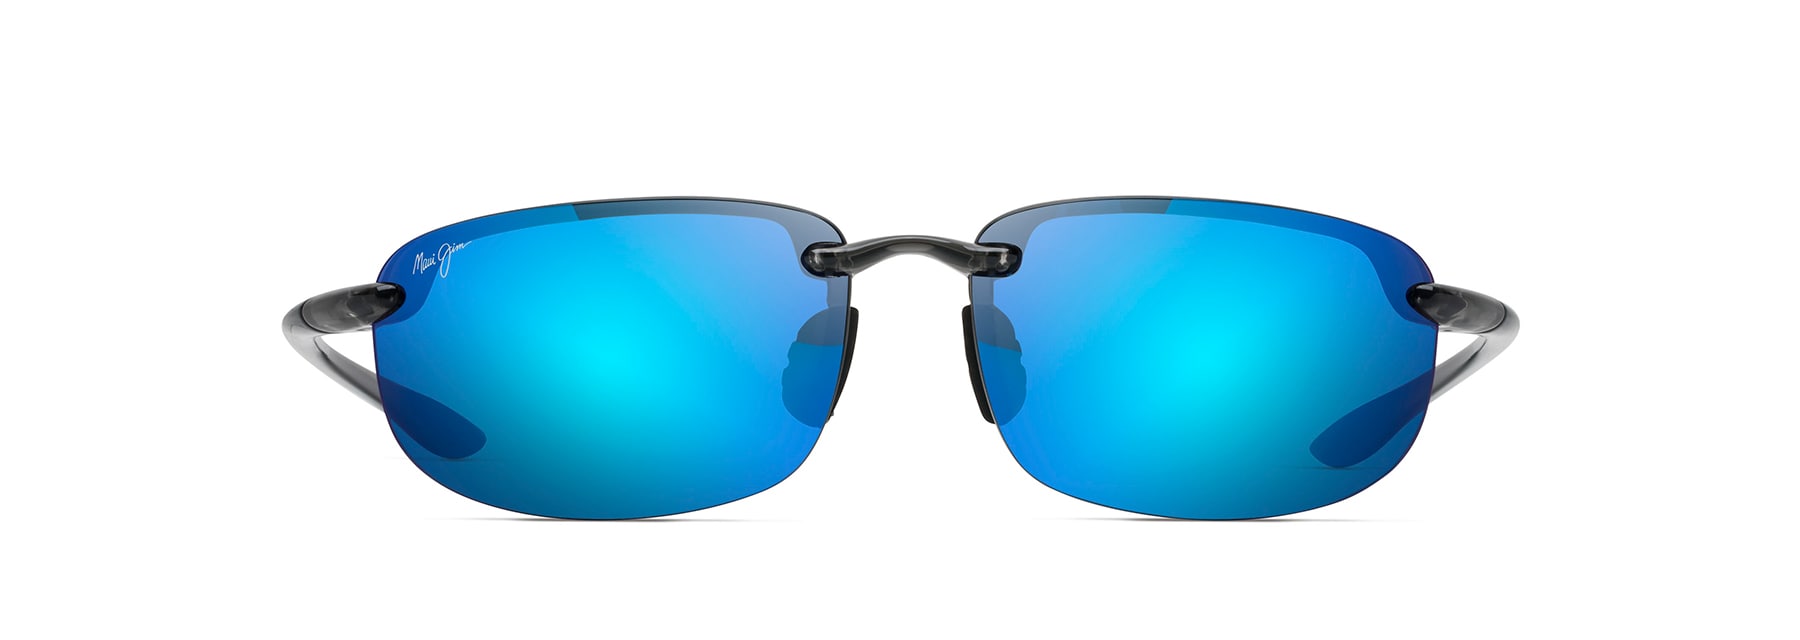 Maui Jim Haleiwa Black Gloss Blue Hawai - B328-02 - Sunglasses - IceOptic